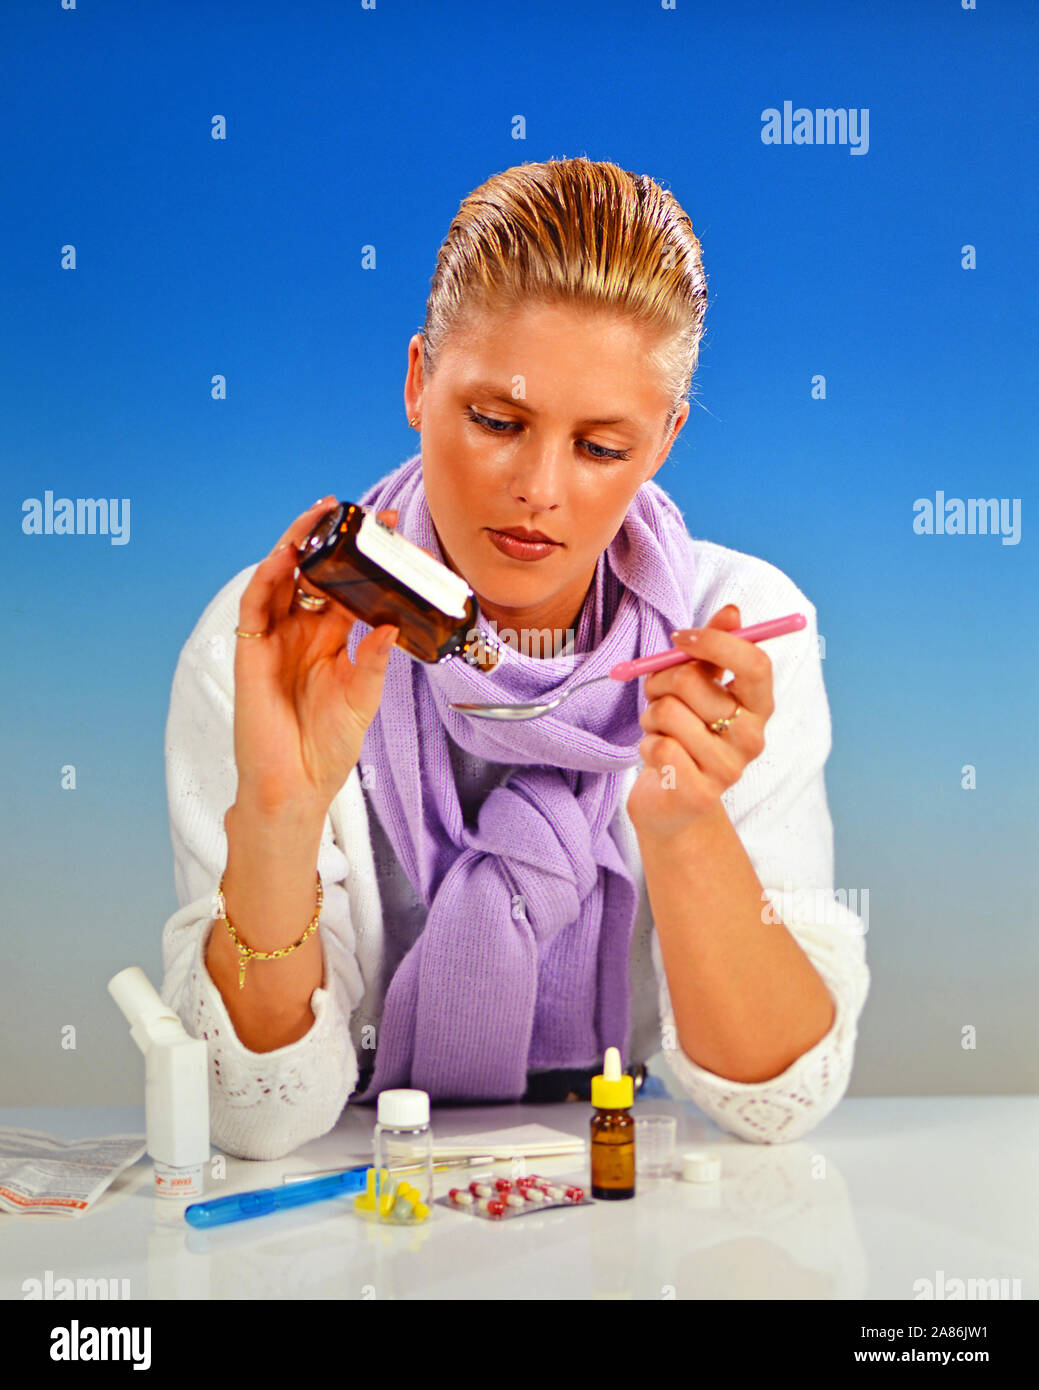 Blonde Frau nimmt Medizin gegen eine Erkaeltung, Stock Photo